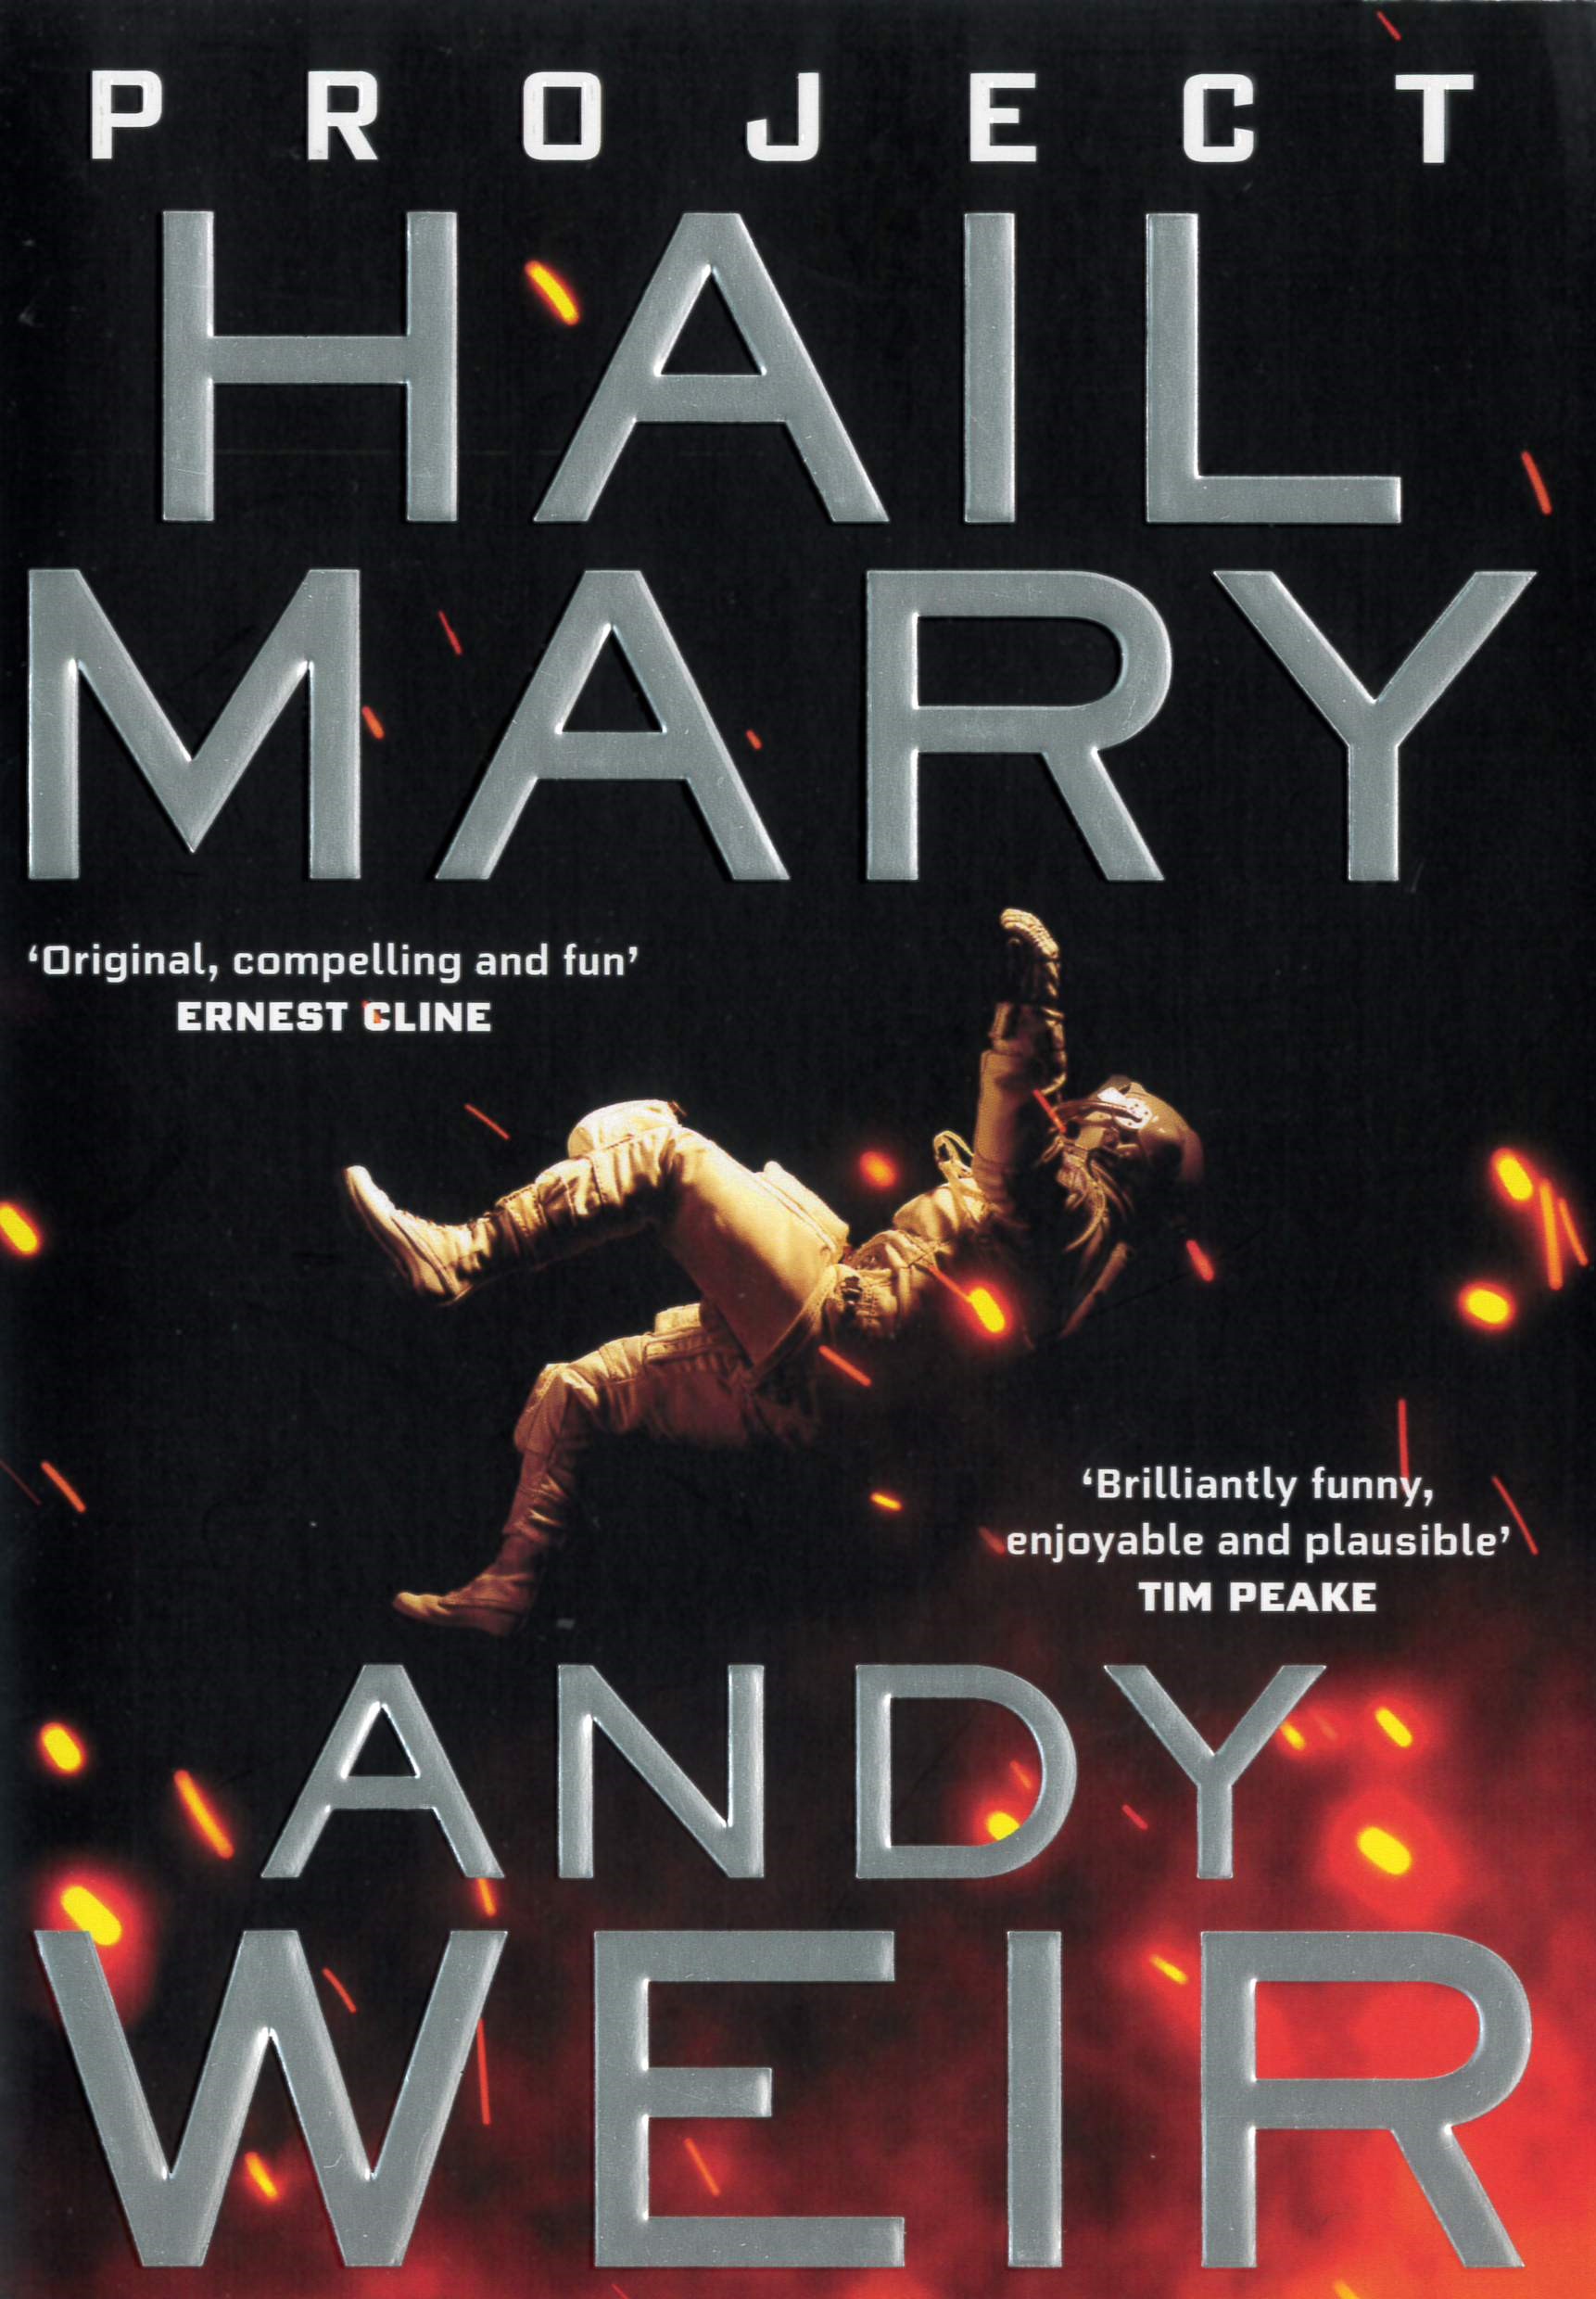 Project Hail Mary : a novel /